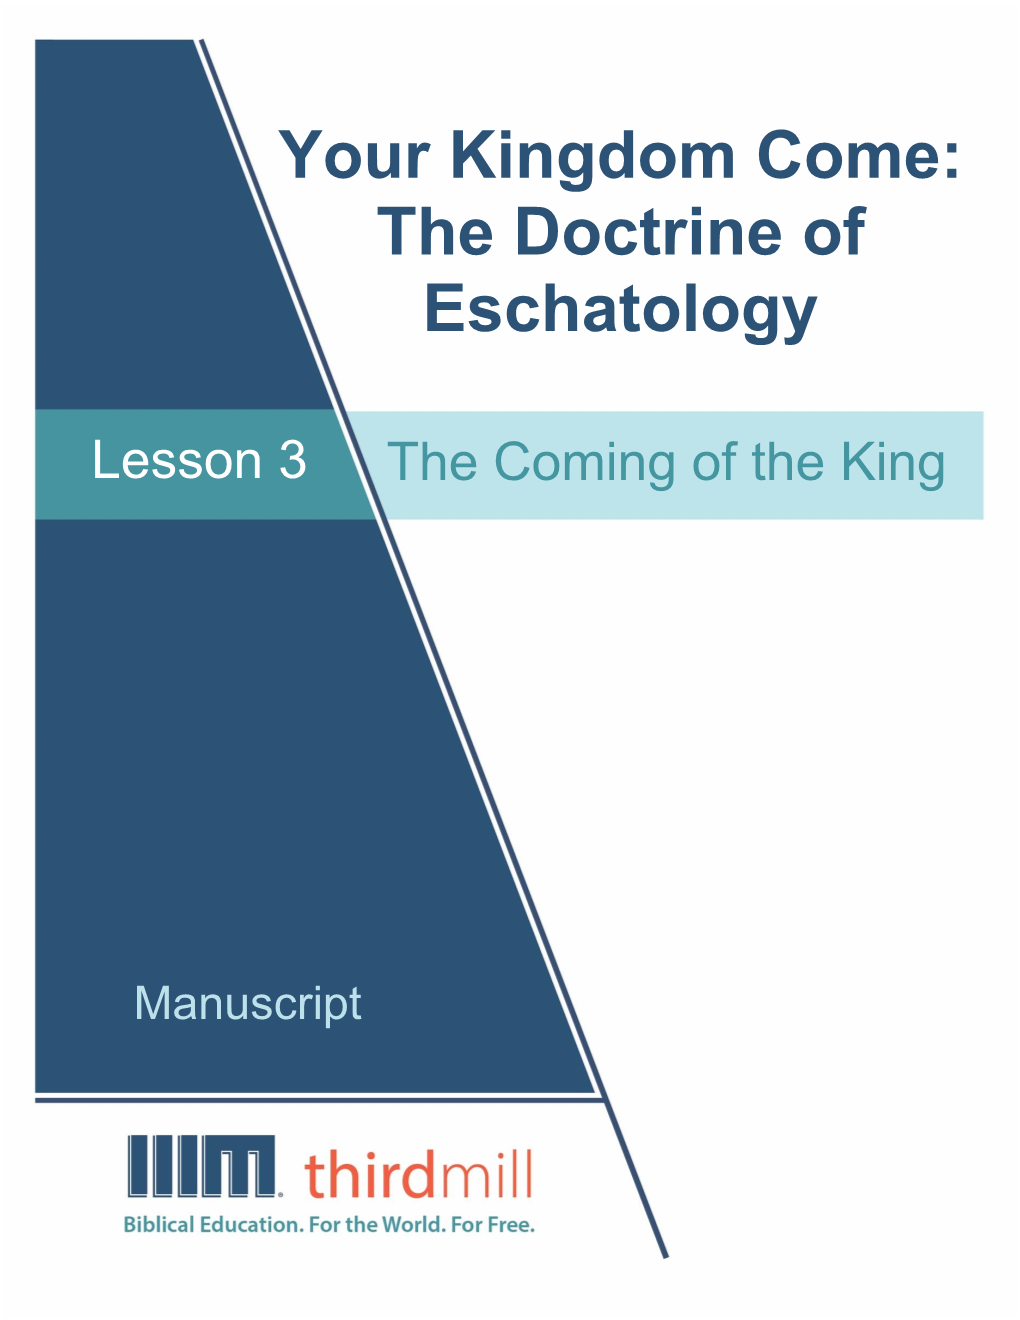 The Doctrine of Eschatology